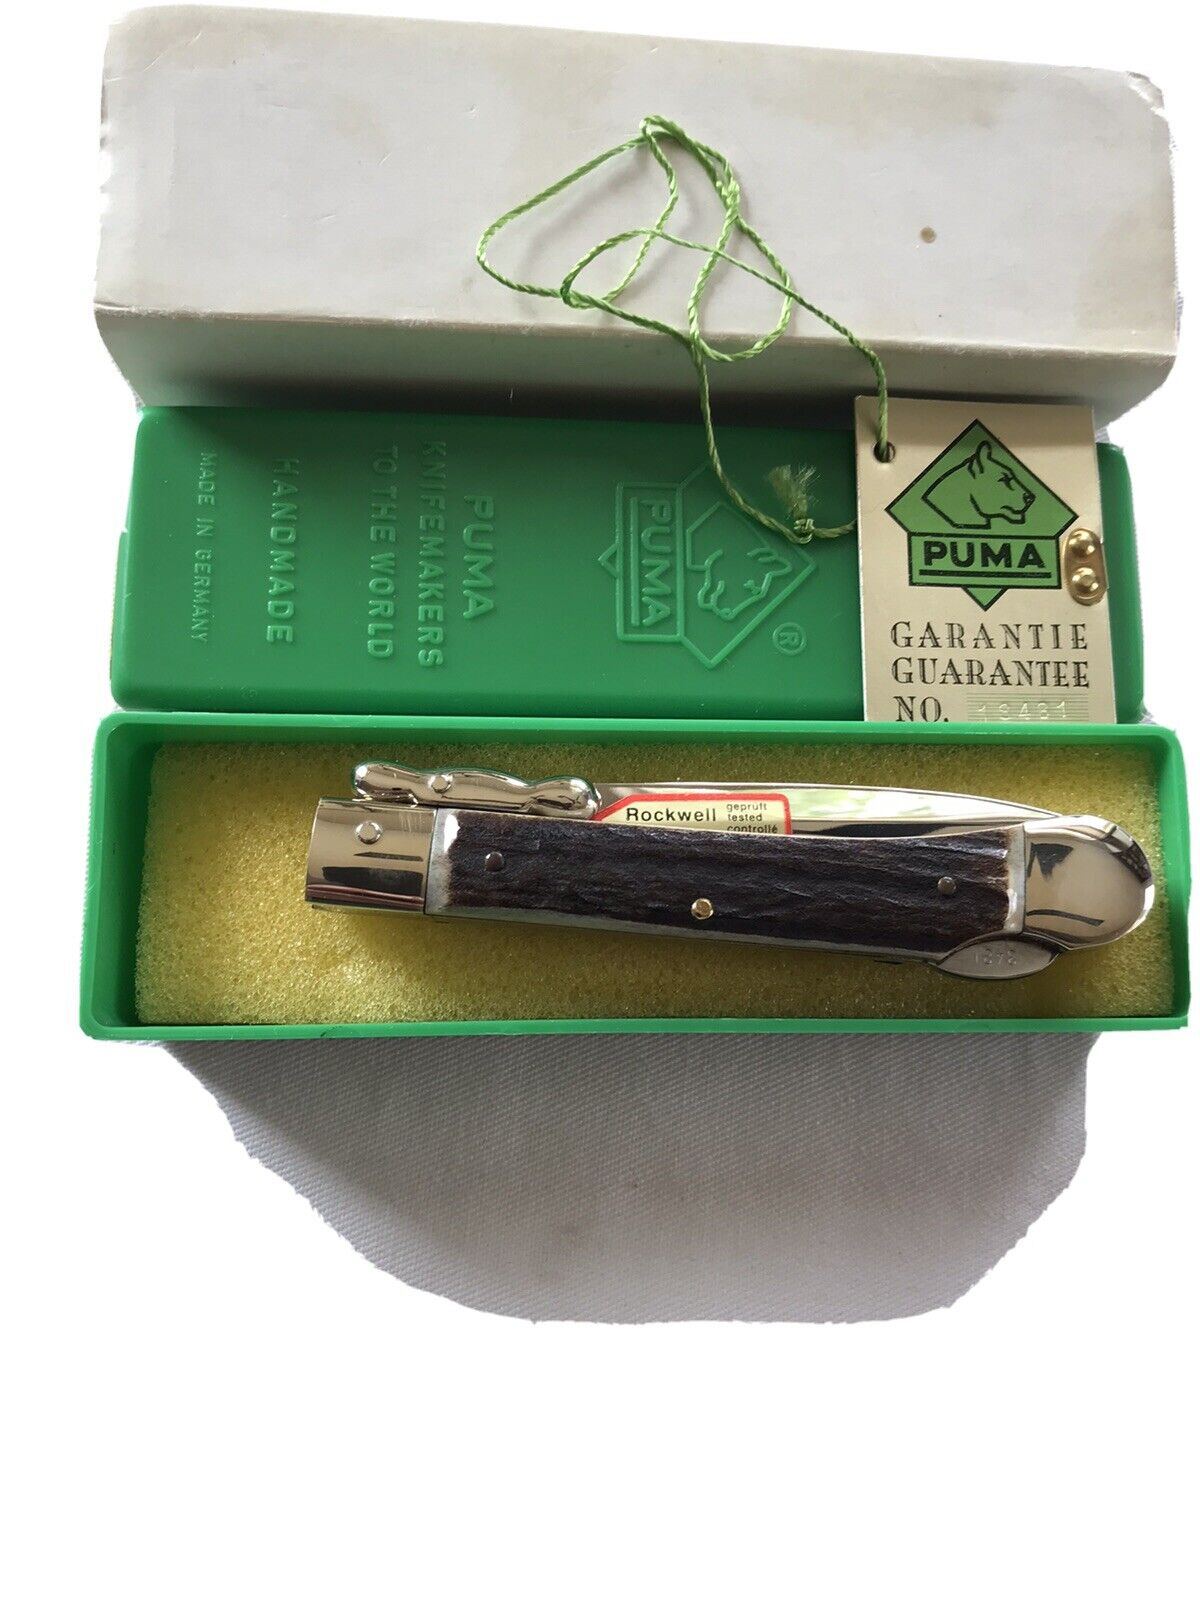 PUMA KNIFE # 563 PUMA-MEDICI VINTAGE HANDMADE GERMANY SAMBAR STAG HANDLES - MINT